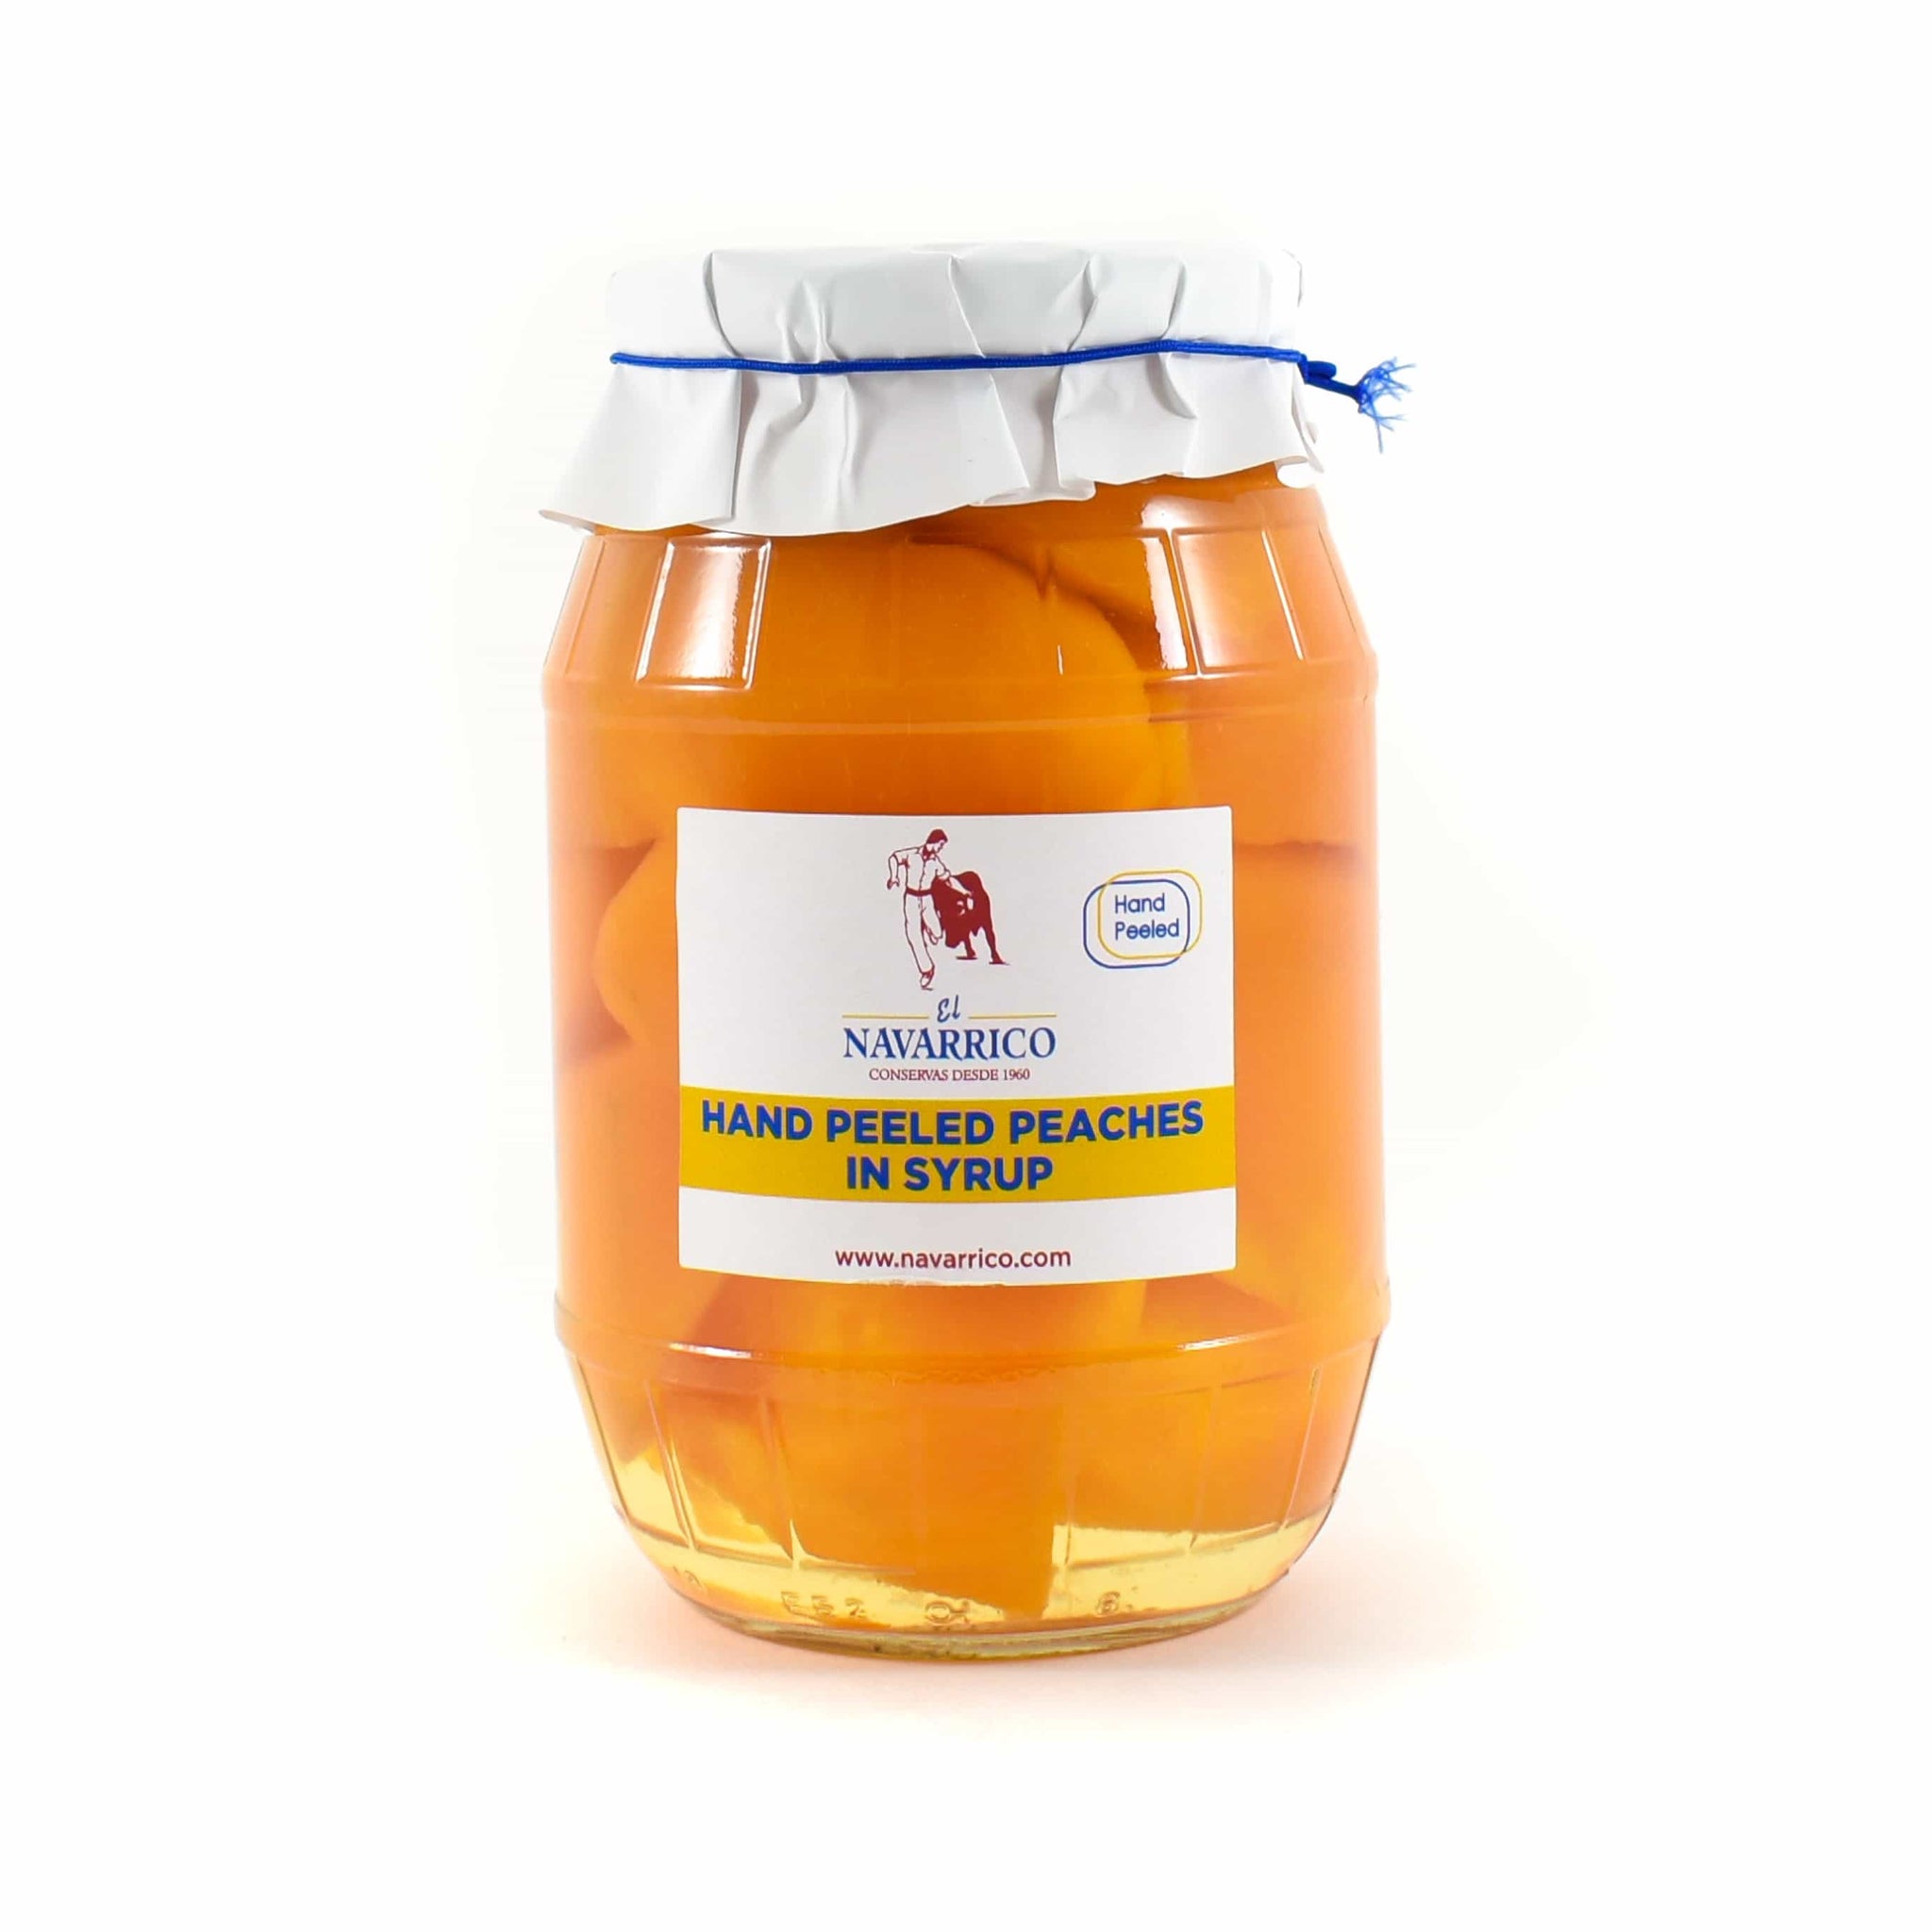 Navarrico Hand-Peeled Peach Halves in Syrup 950g